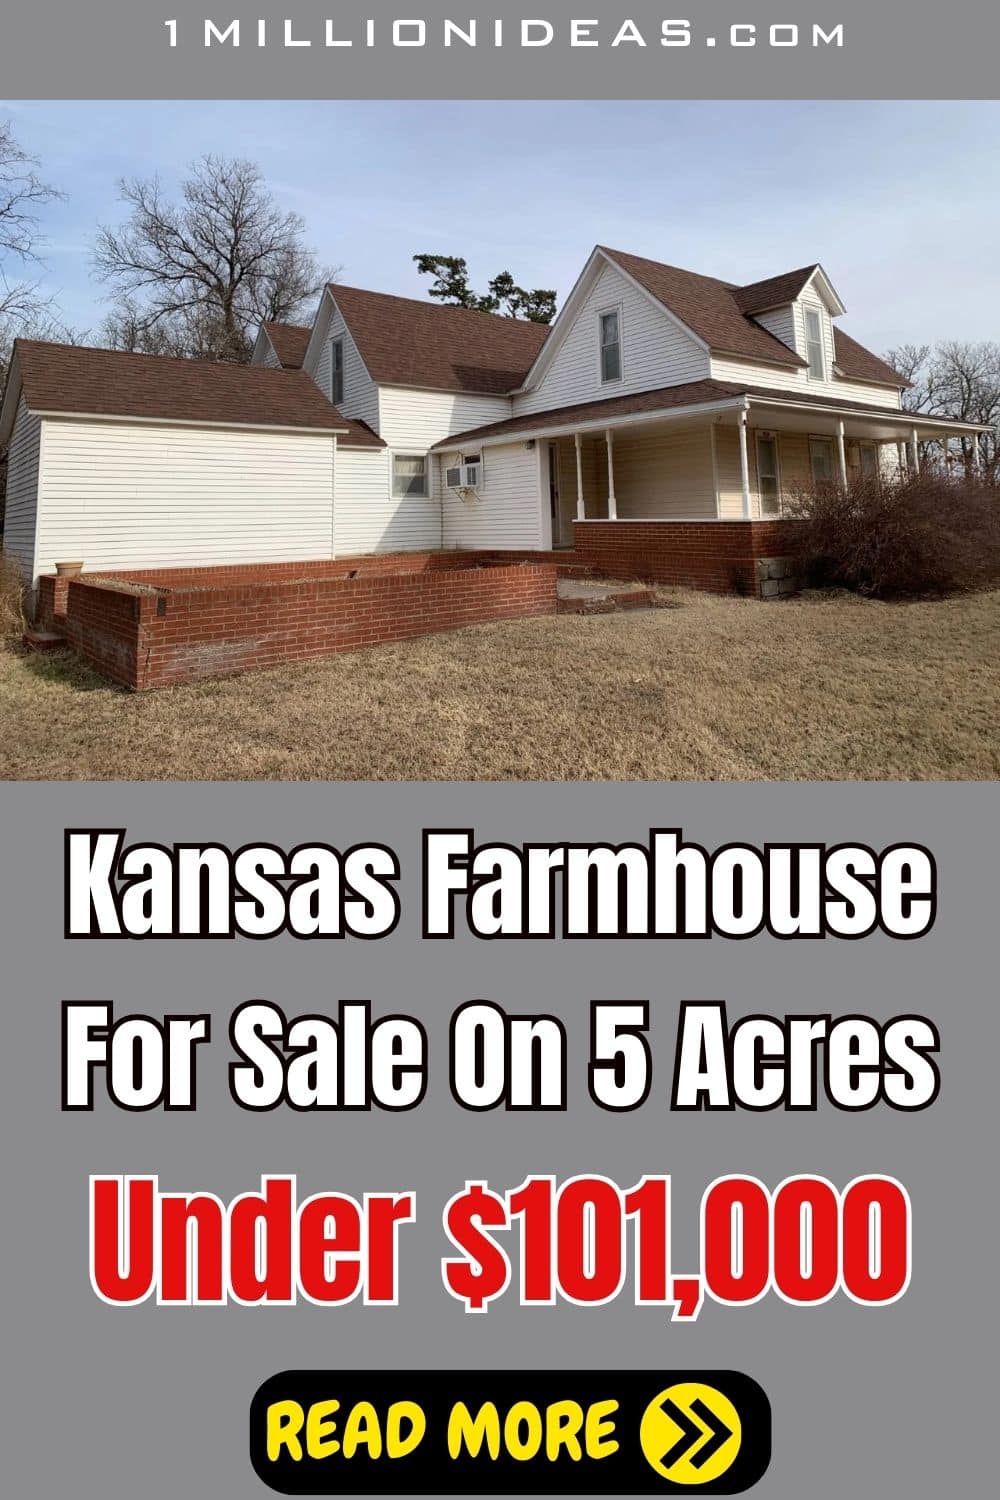 A 5-Bedroom C. 1900 Kansas Farmhouse For Sale On 5 Acres Under $101,000 - 119